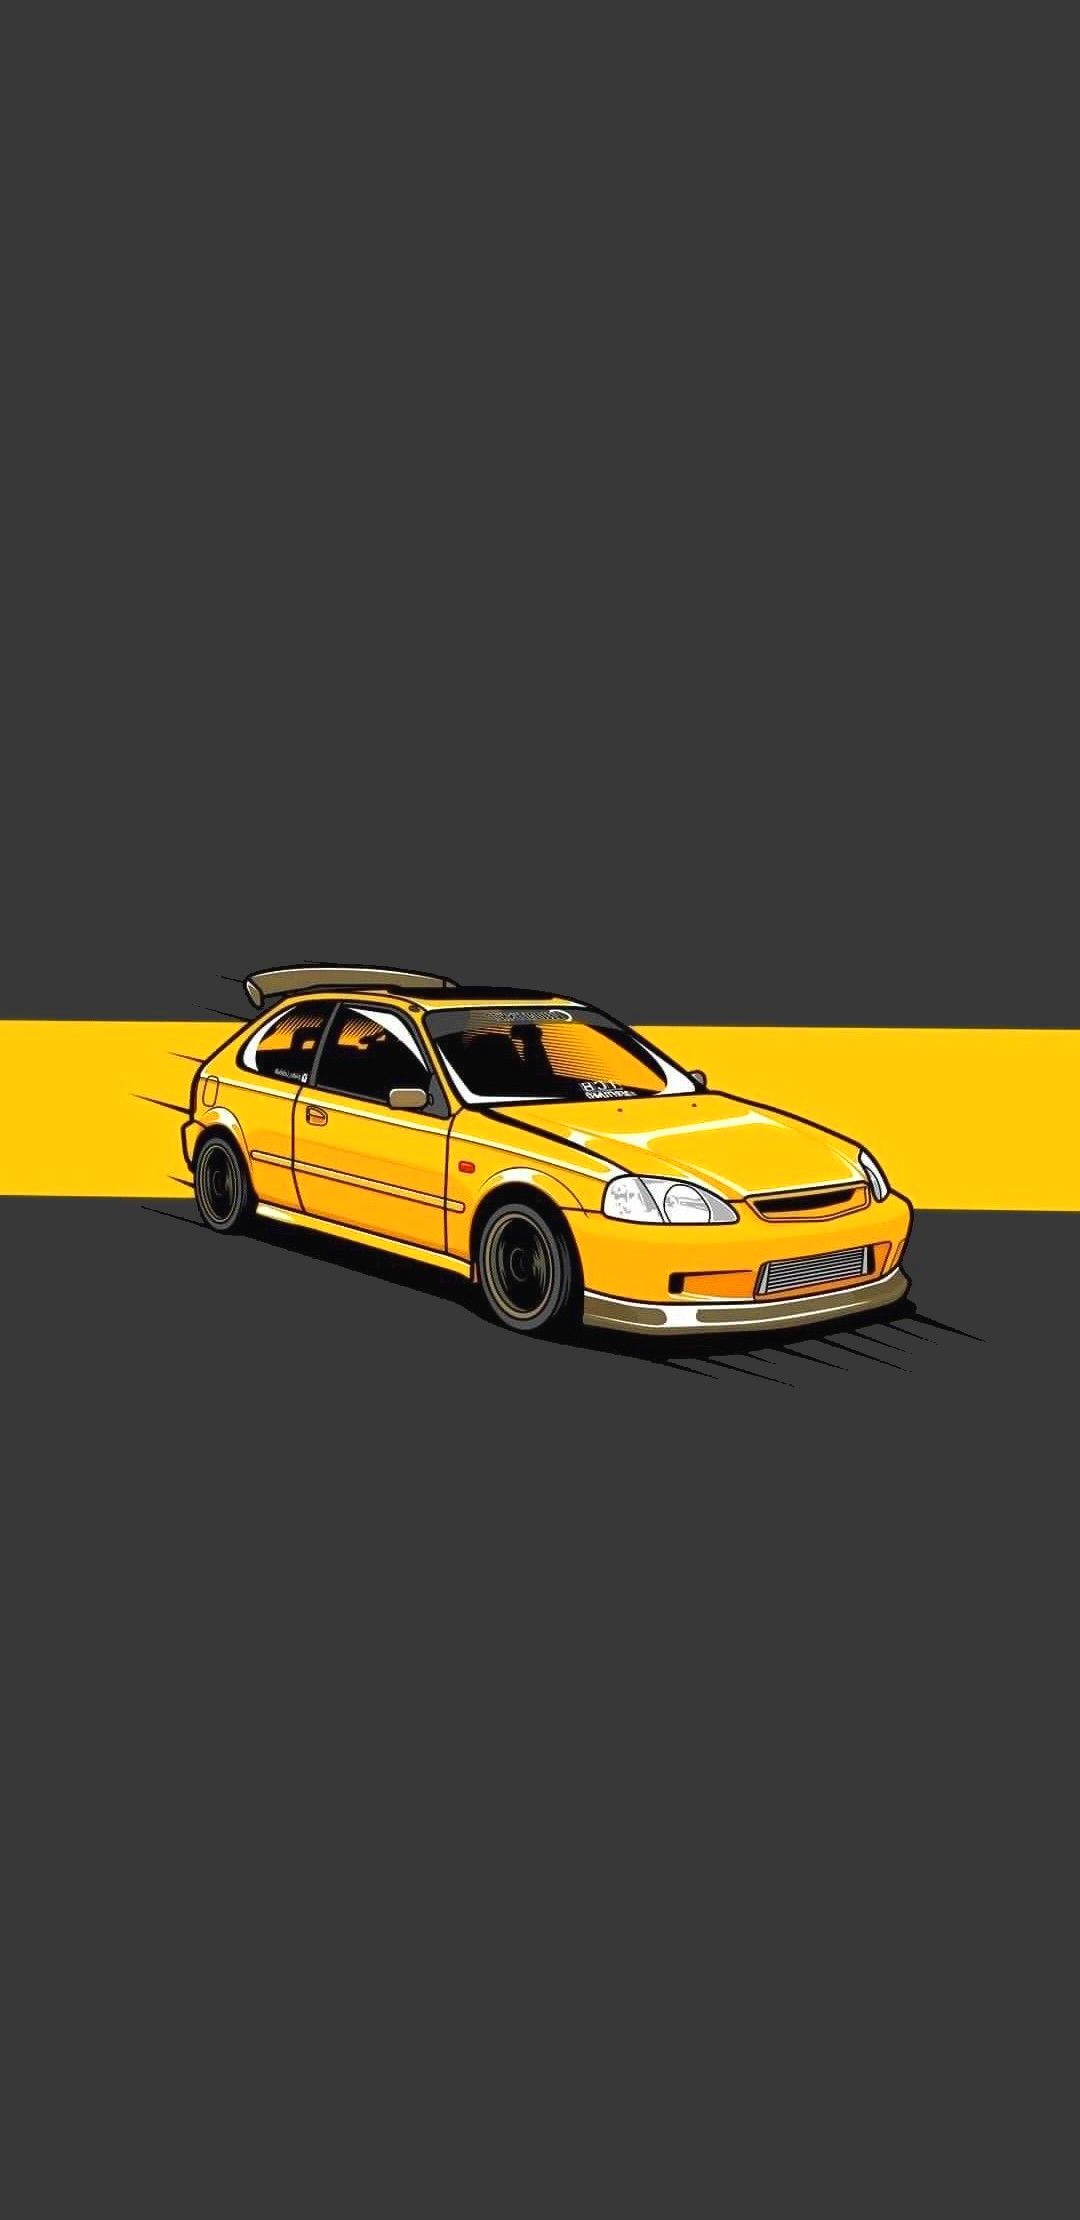 JDM Car Wallpaper - KoLPaPer - Awesome Free HD Wallpapers